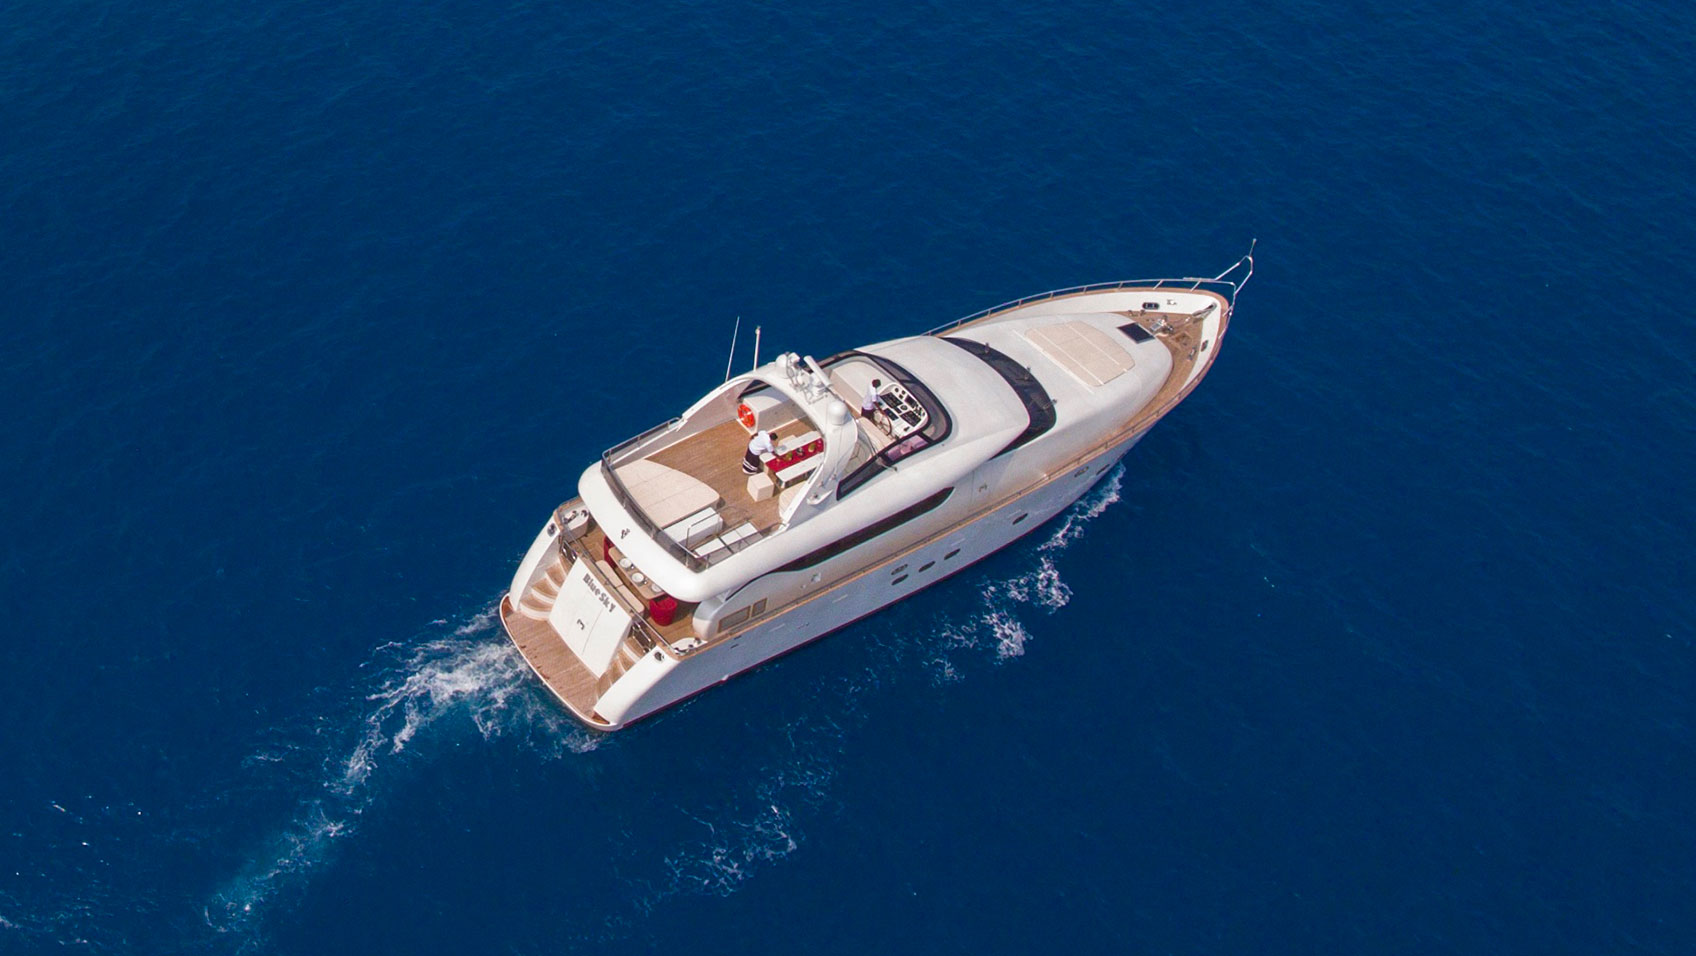 Maldives Yacht Charter - Yacht Rentals in Maldives - Best Yachts